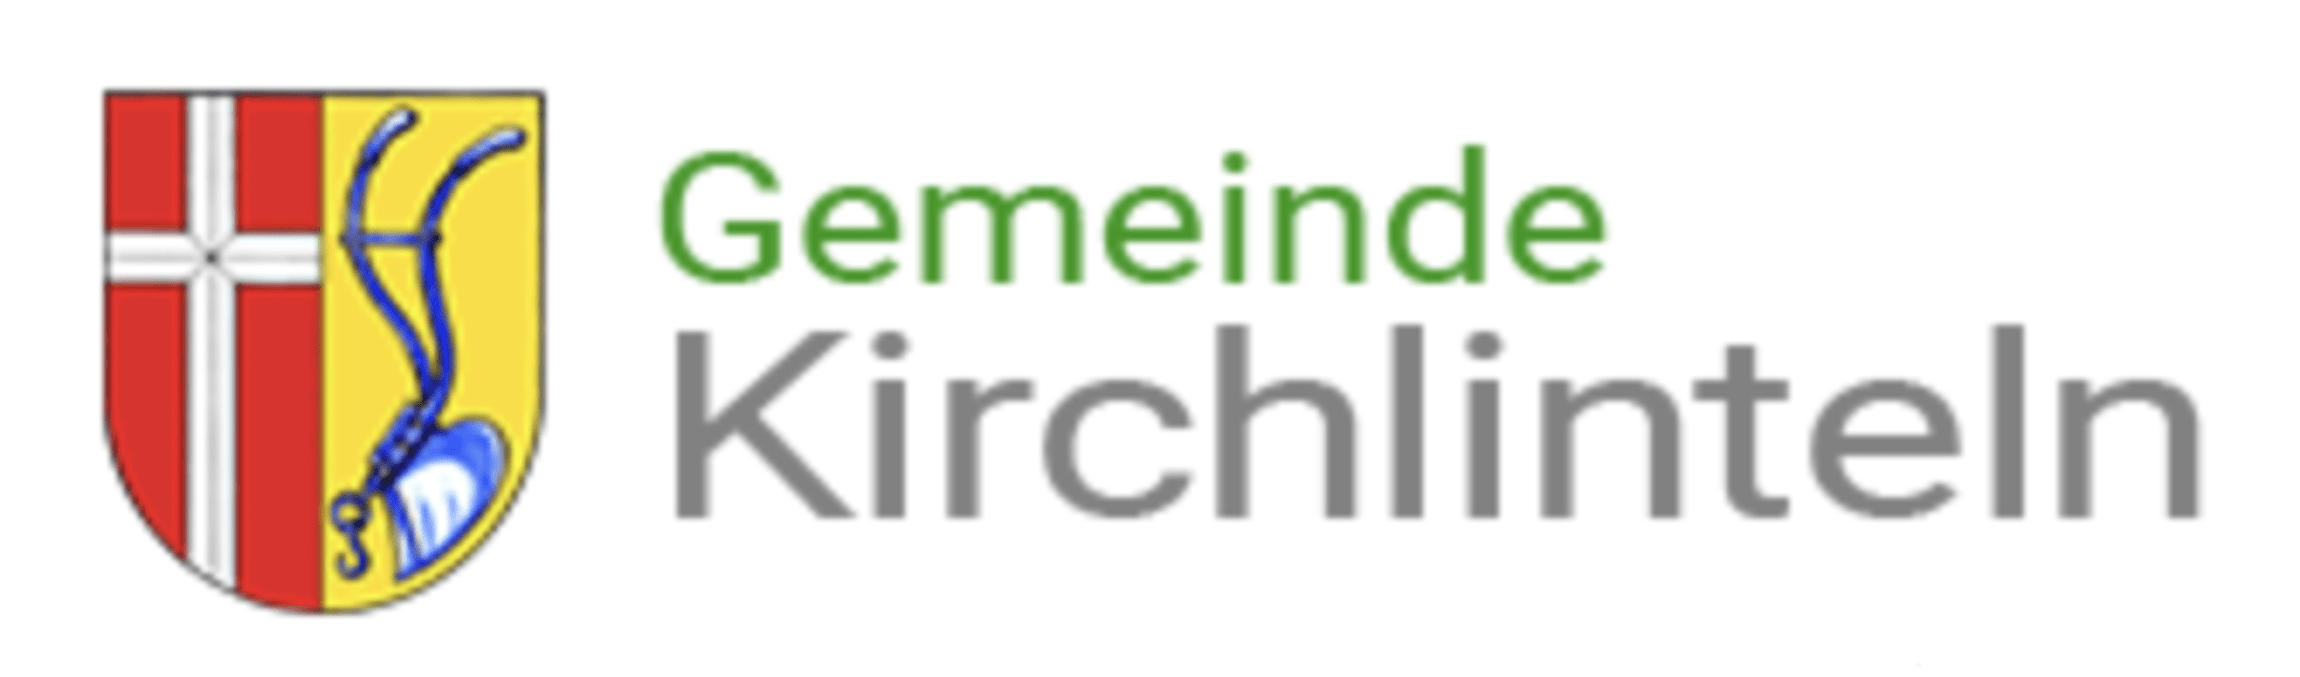 Logo_Gemeinde_Kirchlinteln